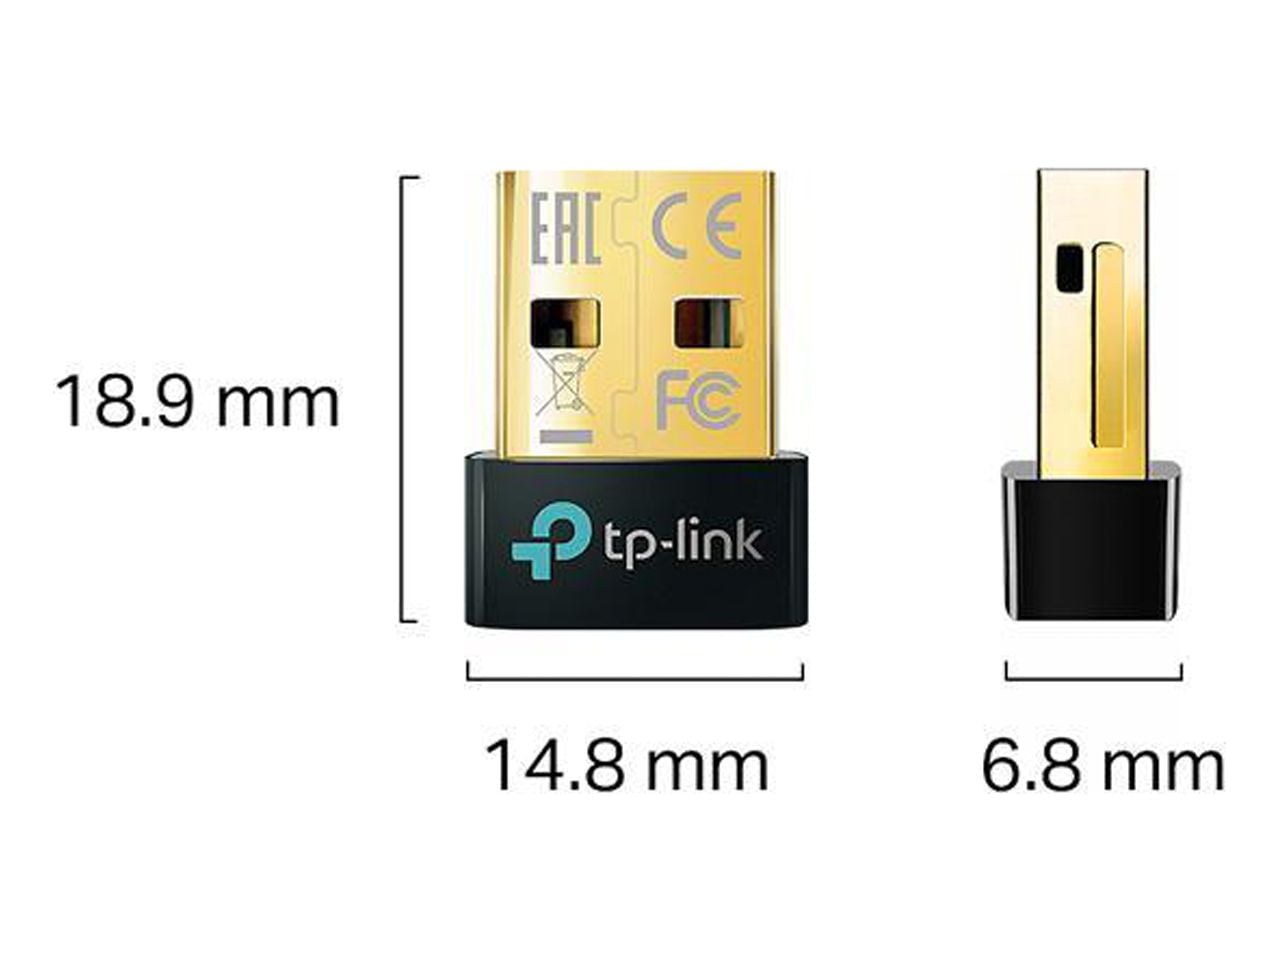 TP-Link UB500 USB 2.0 Bluetooth 5.0 Nano USB Adapter 